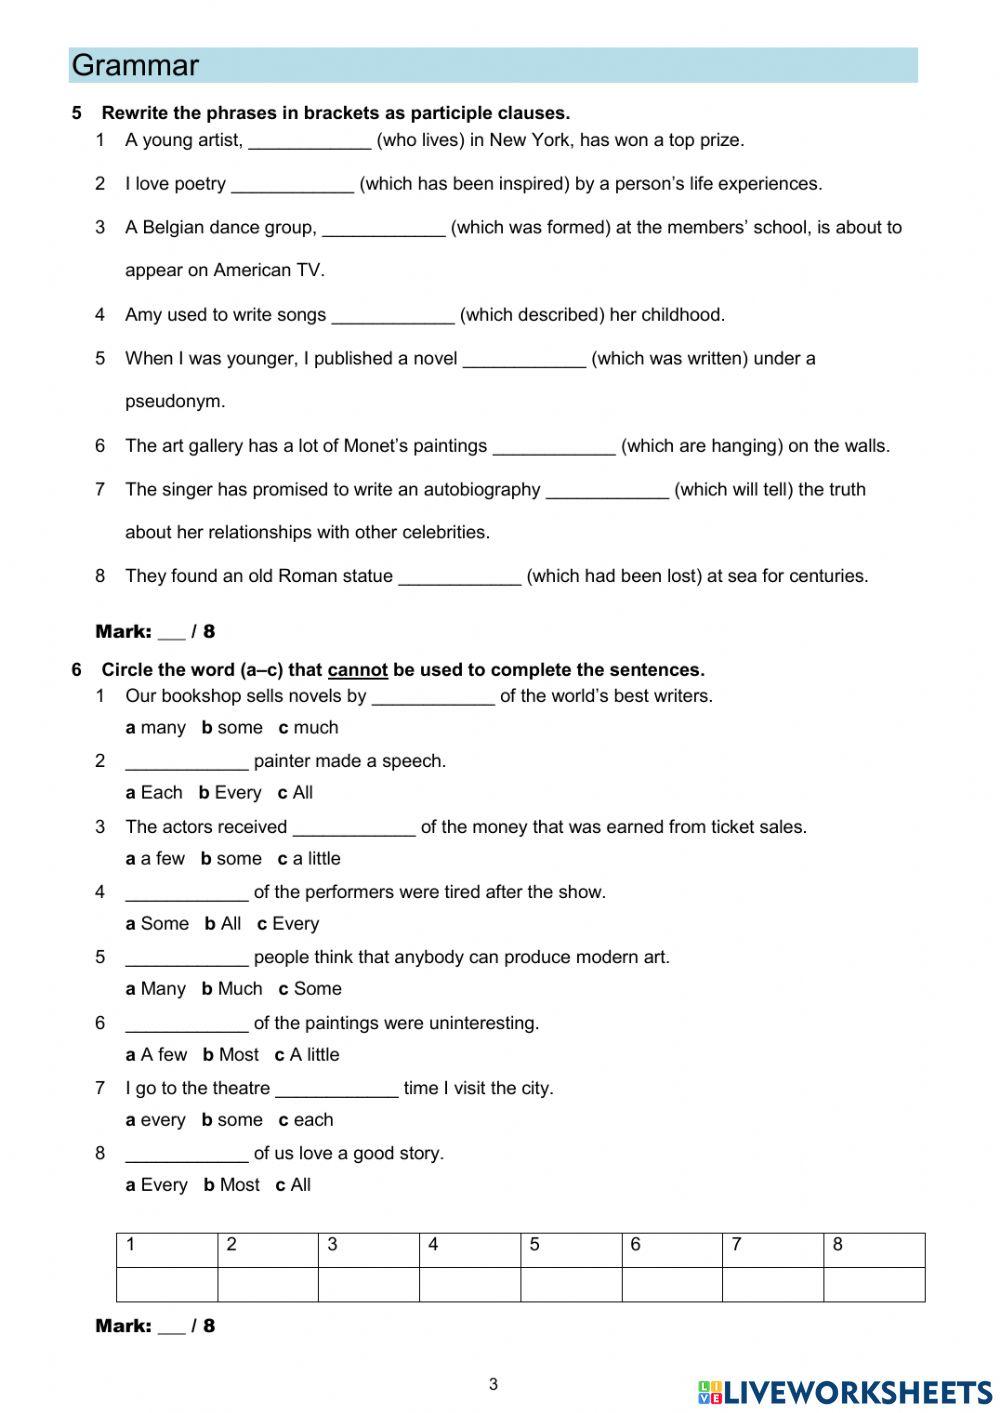 Grammar and Vocabulary Test-Unit 10